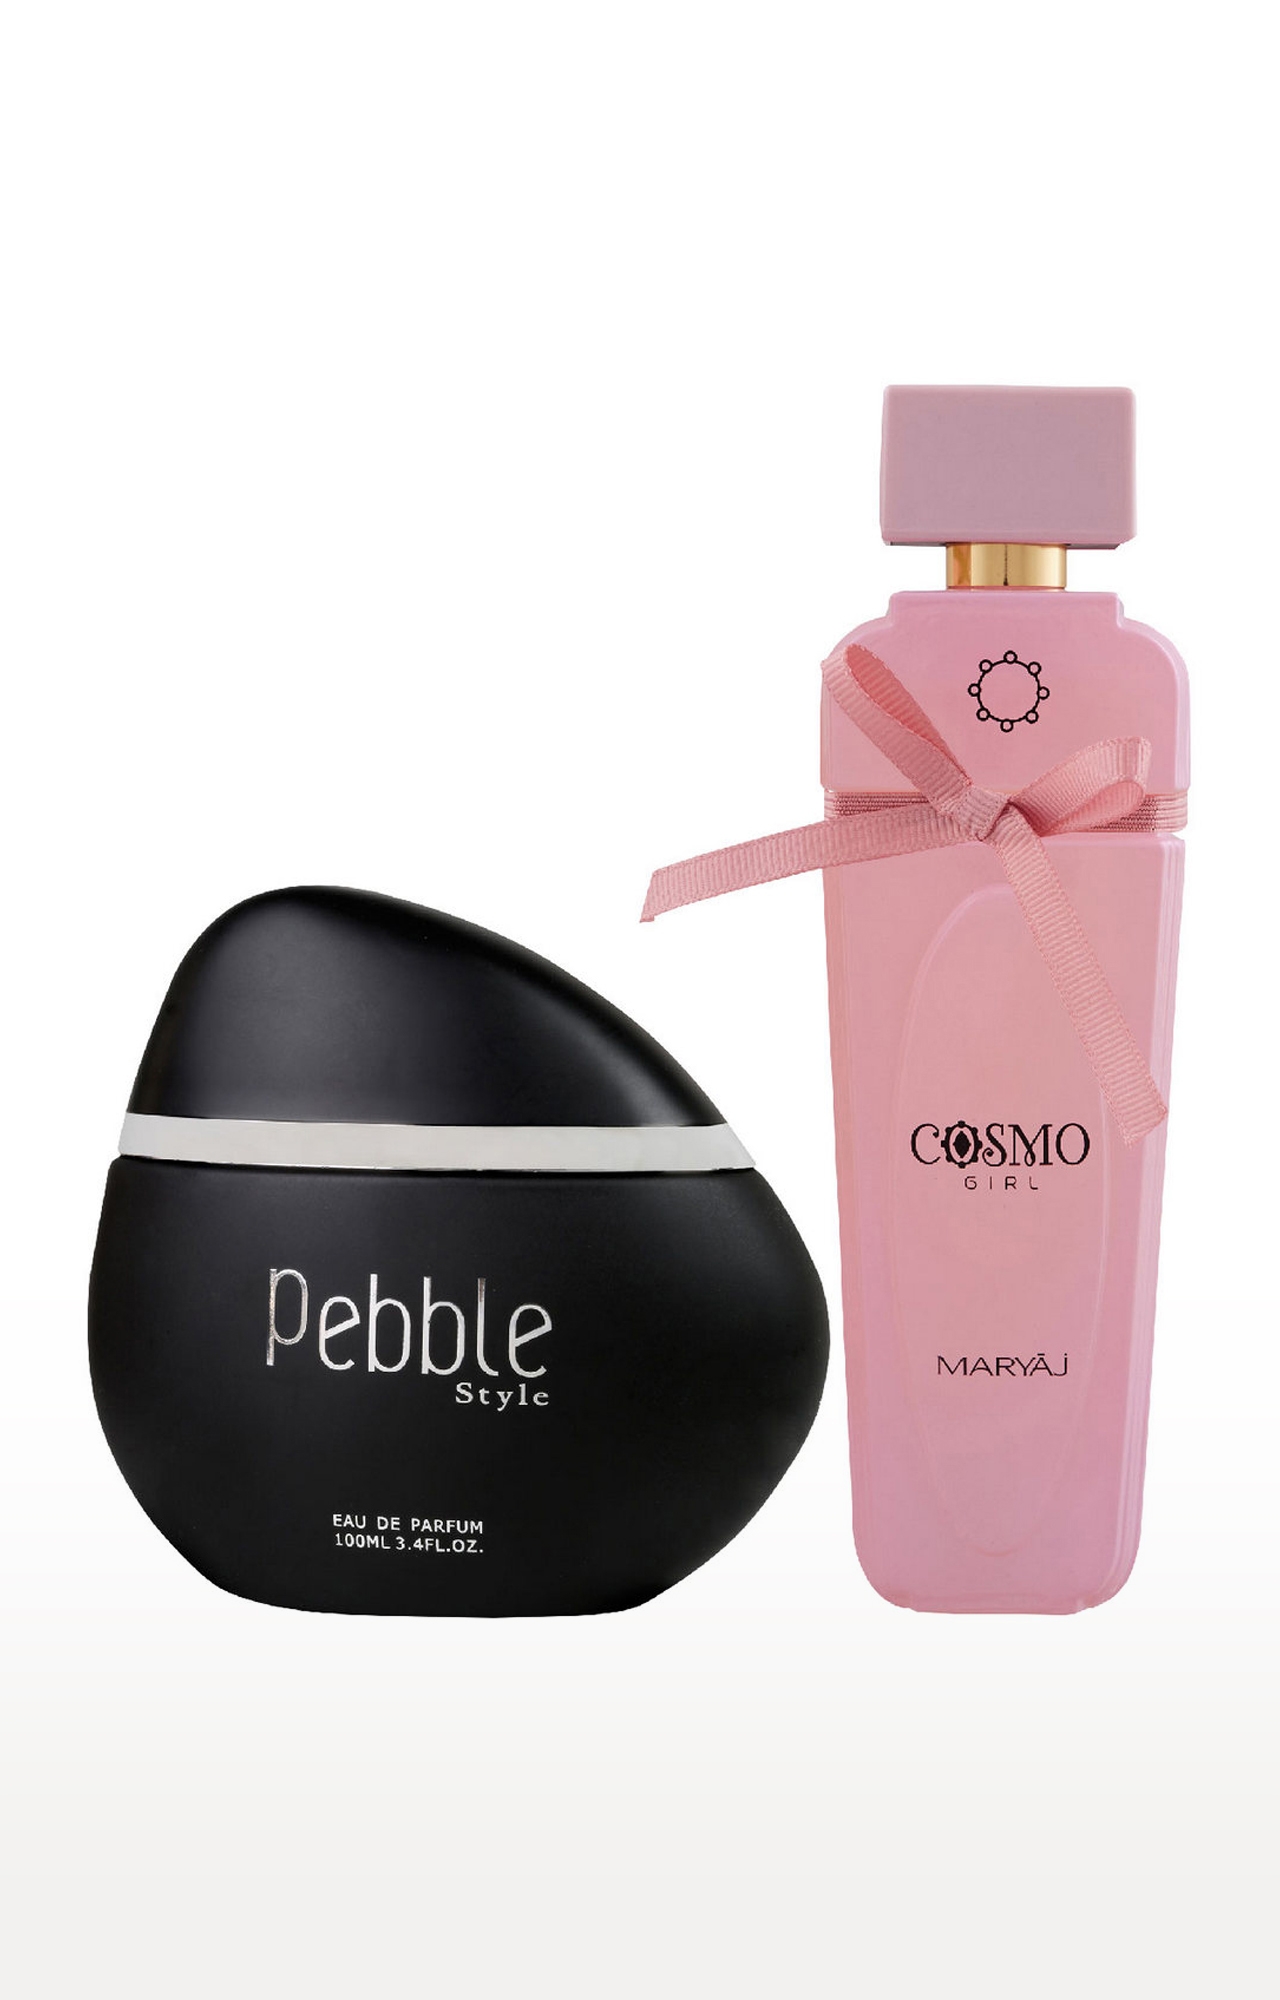 Maryaj Pebble Style Eau De Parfum Perfume 100ml for Men and Maryaj Cosmo Girl Eau De Parfum Perfume 100ml for WoMen